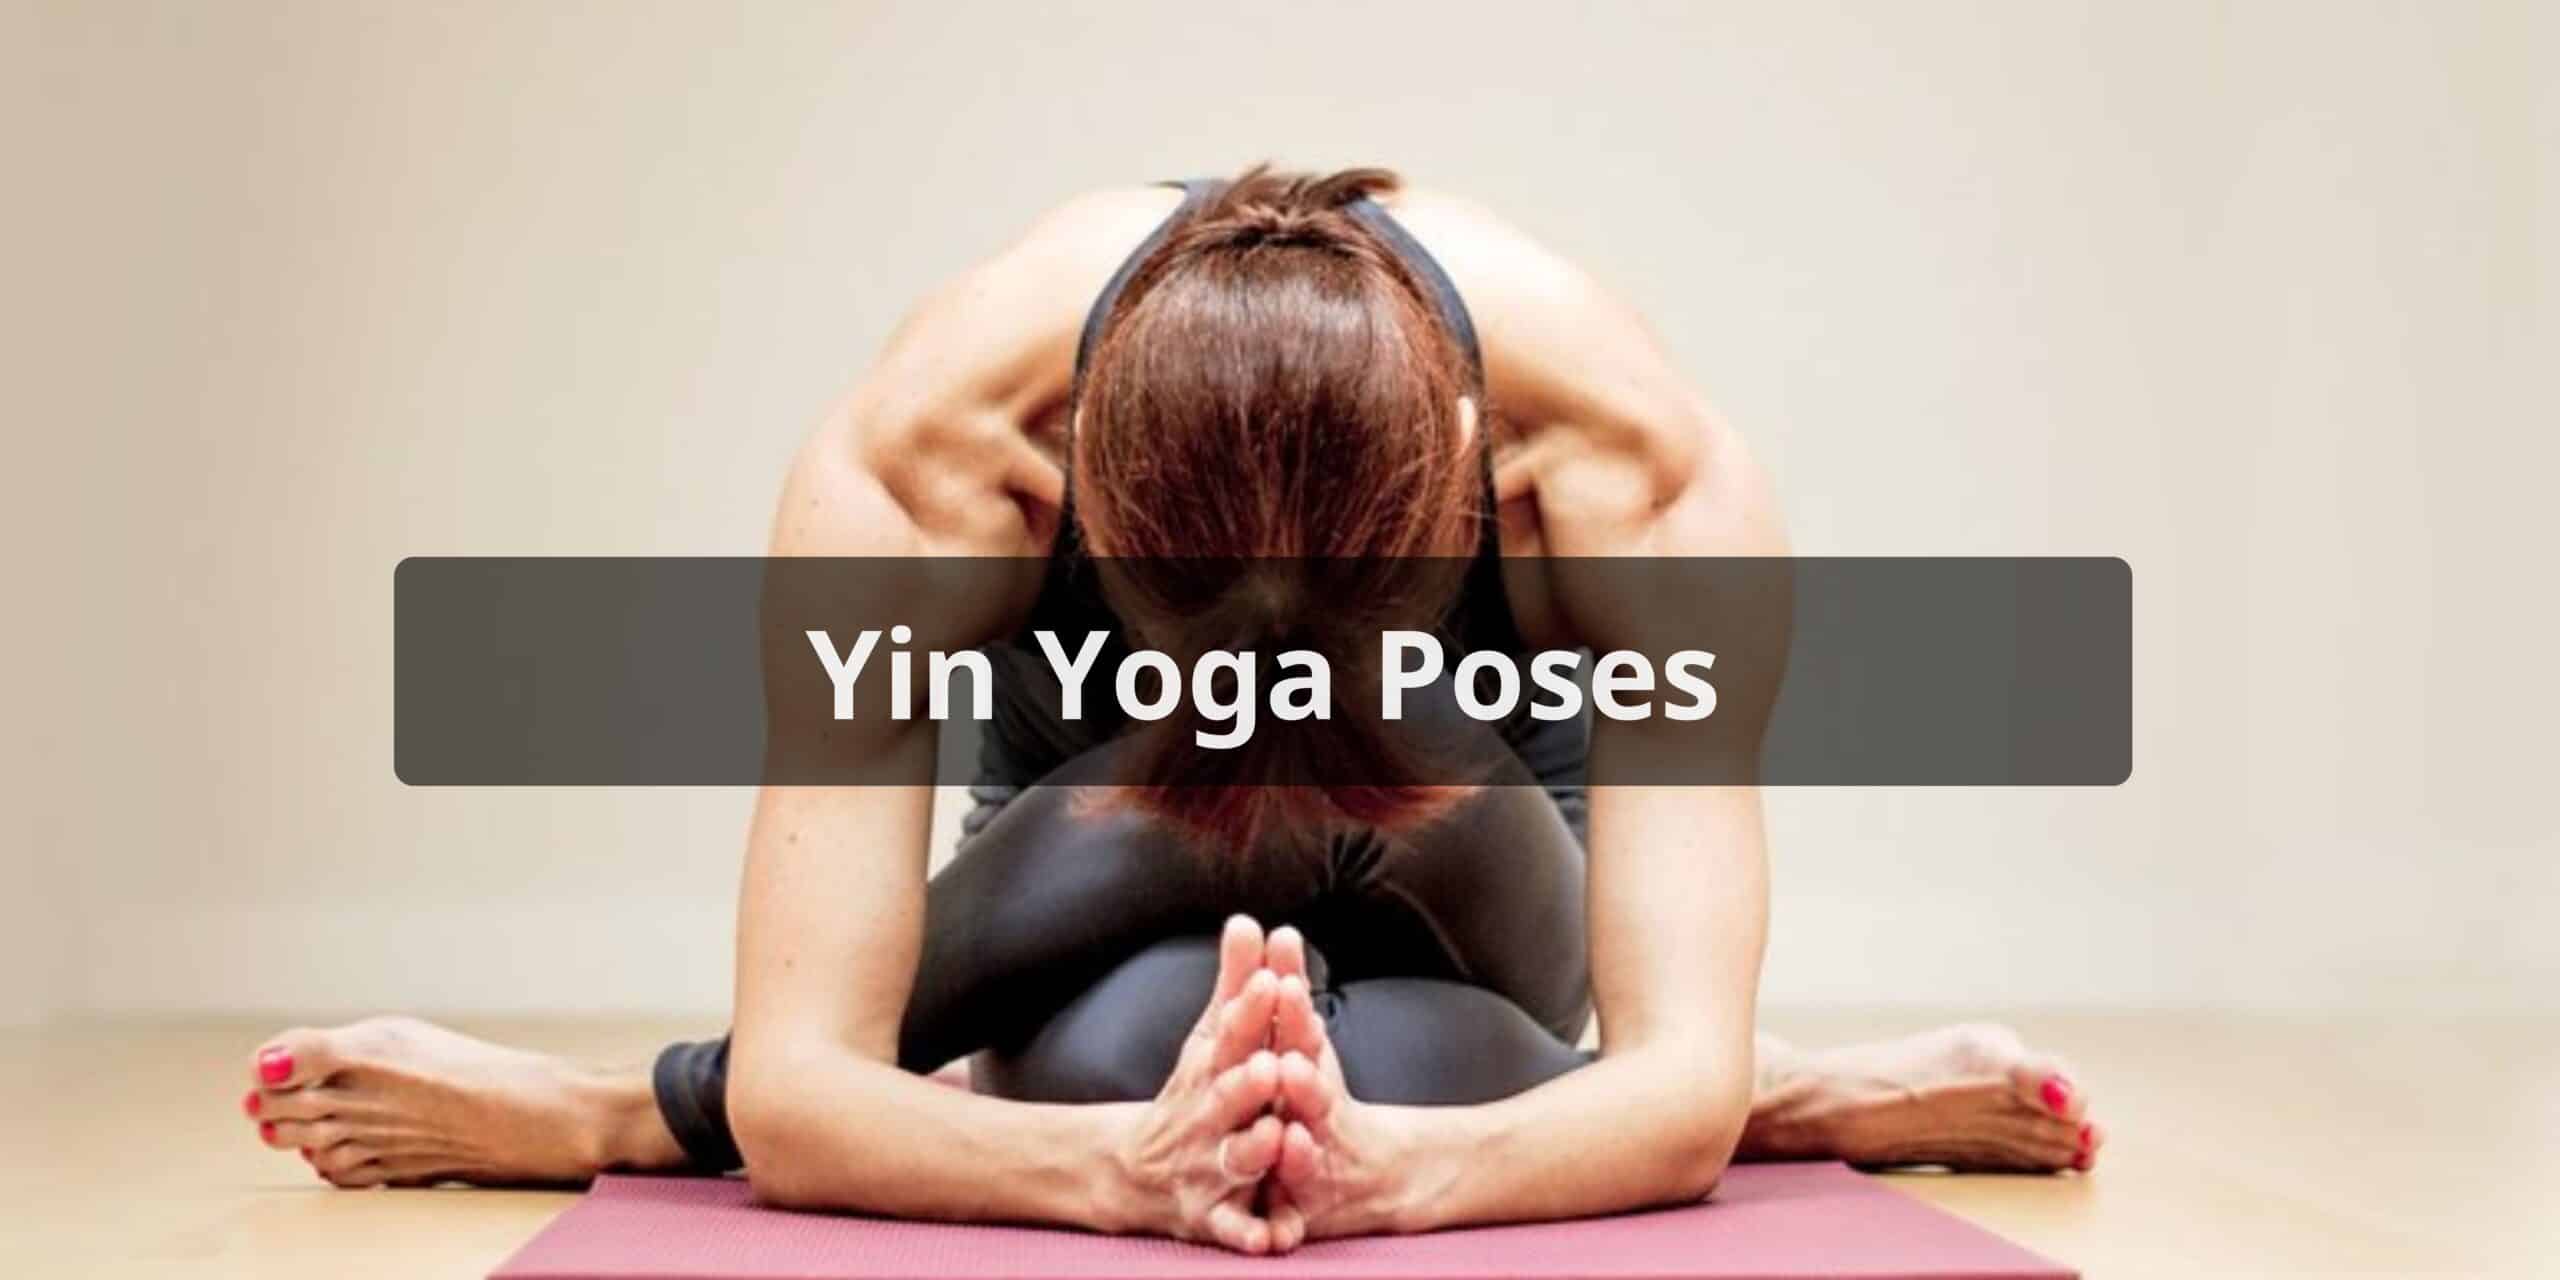 List of Yin Yoga Poses